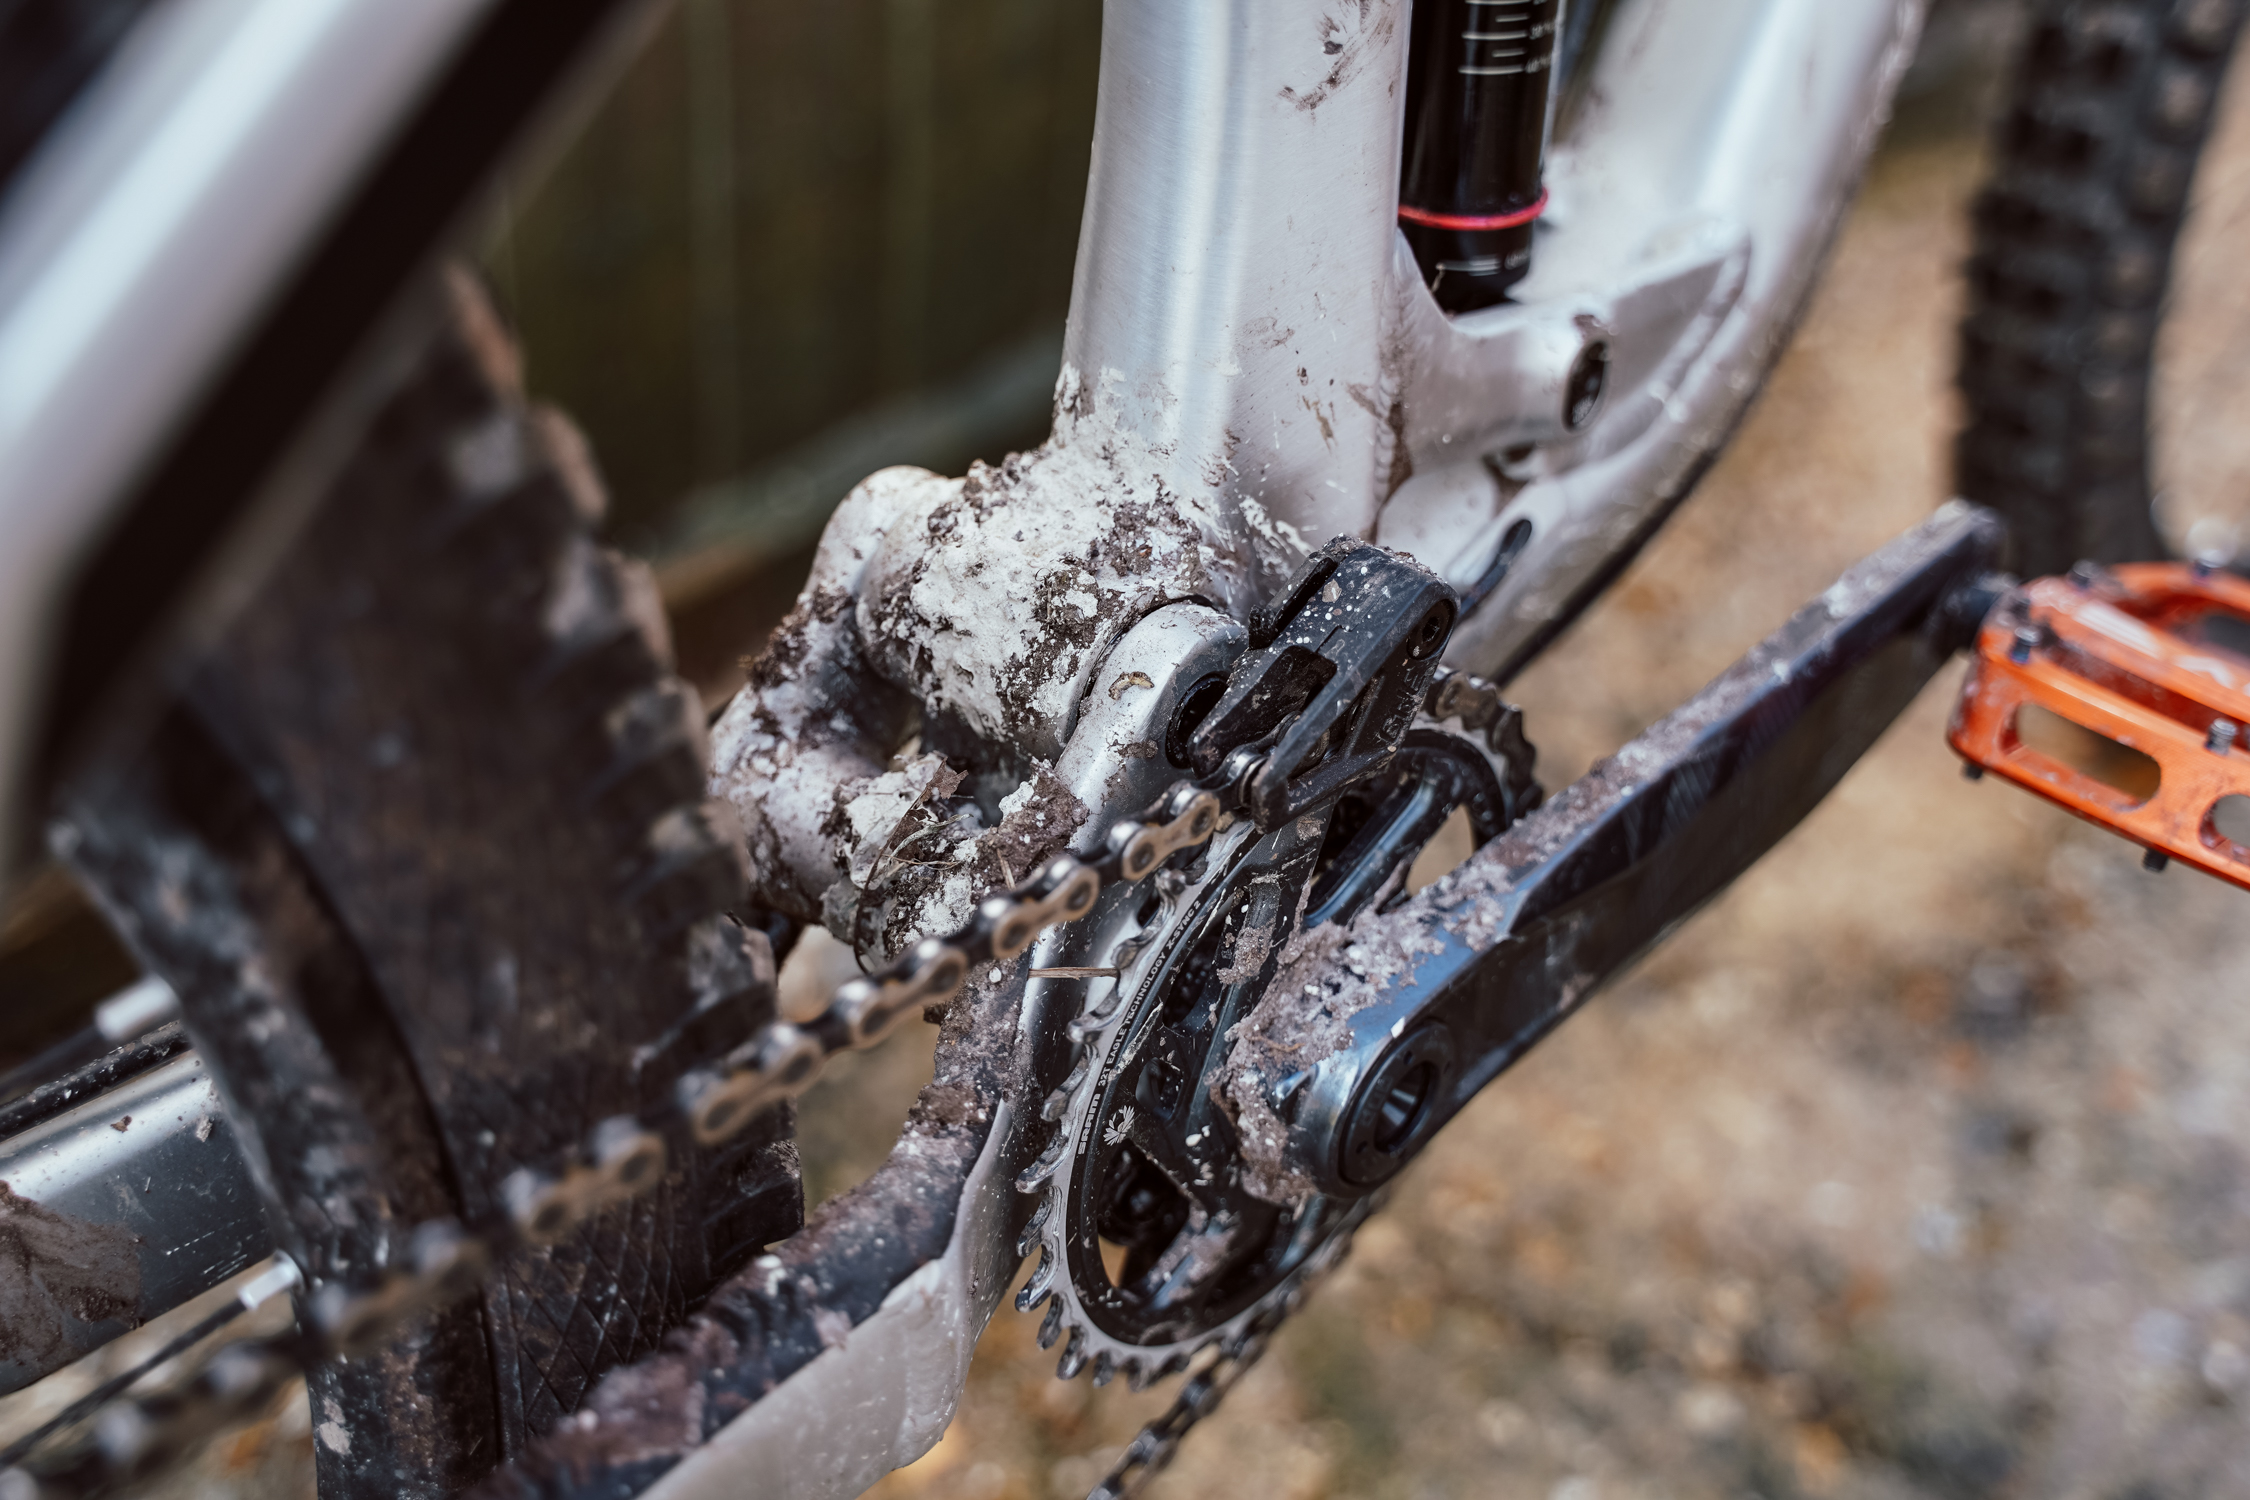 How to clean your mountain bike - dirty bike